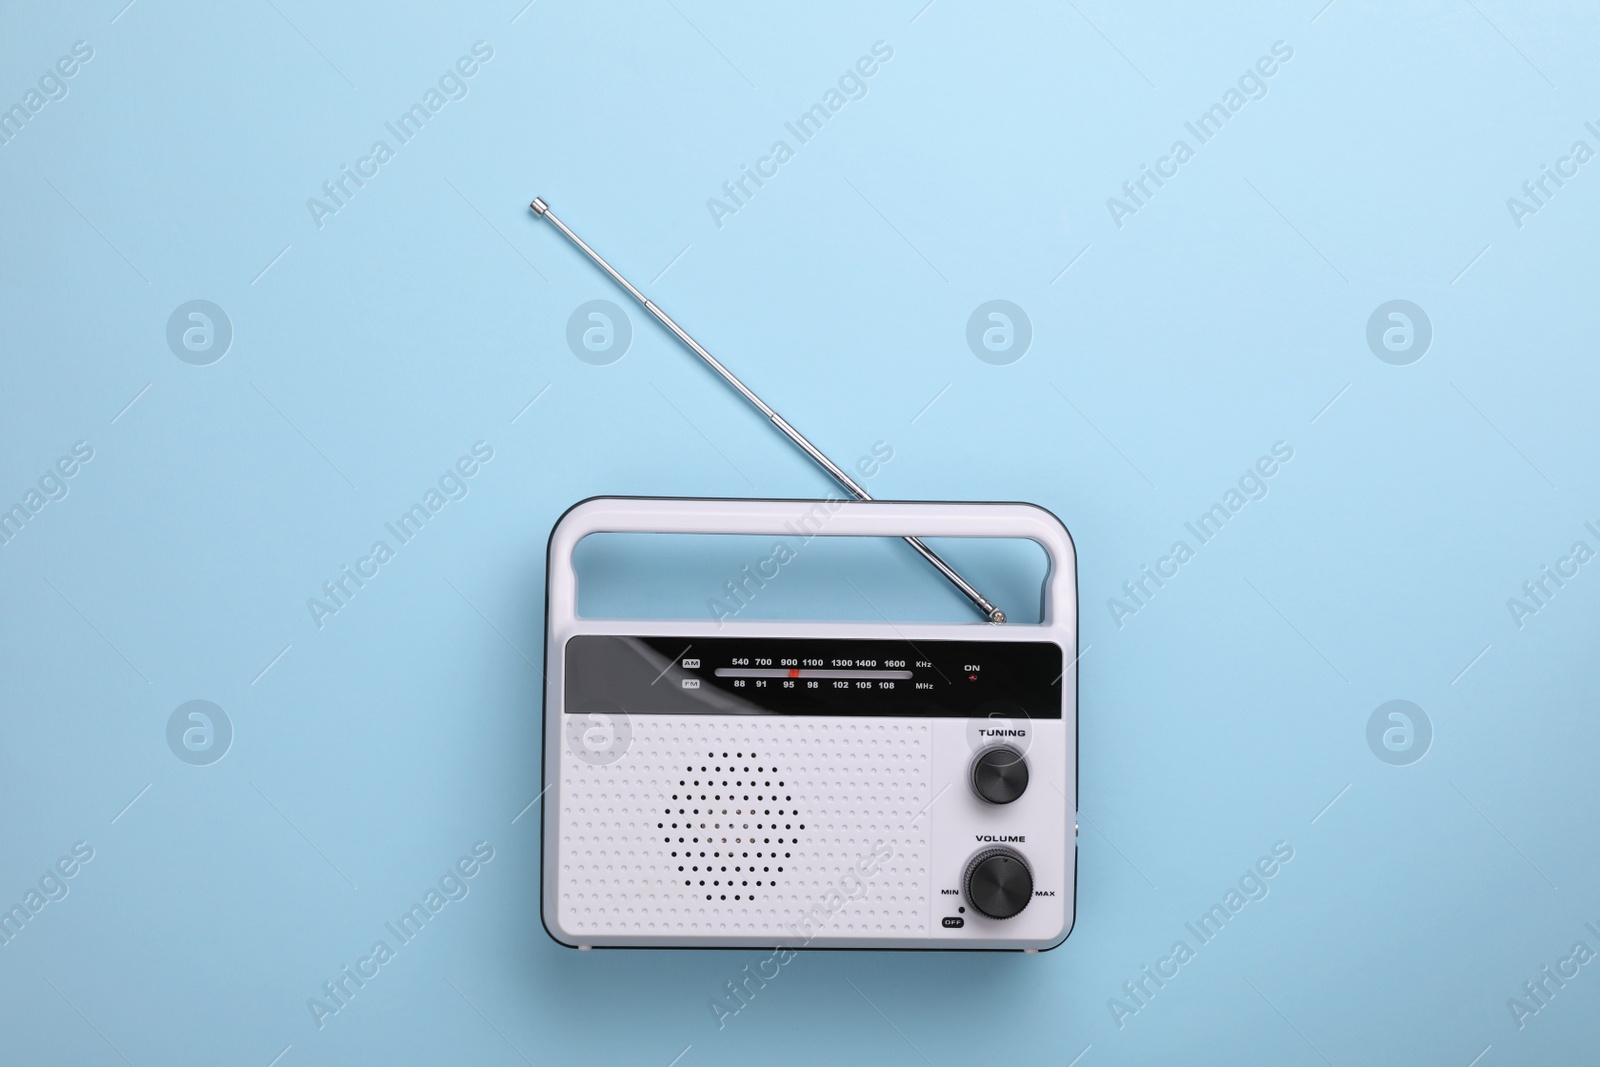 Photo of Retro radio receiver on light blue background, top view